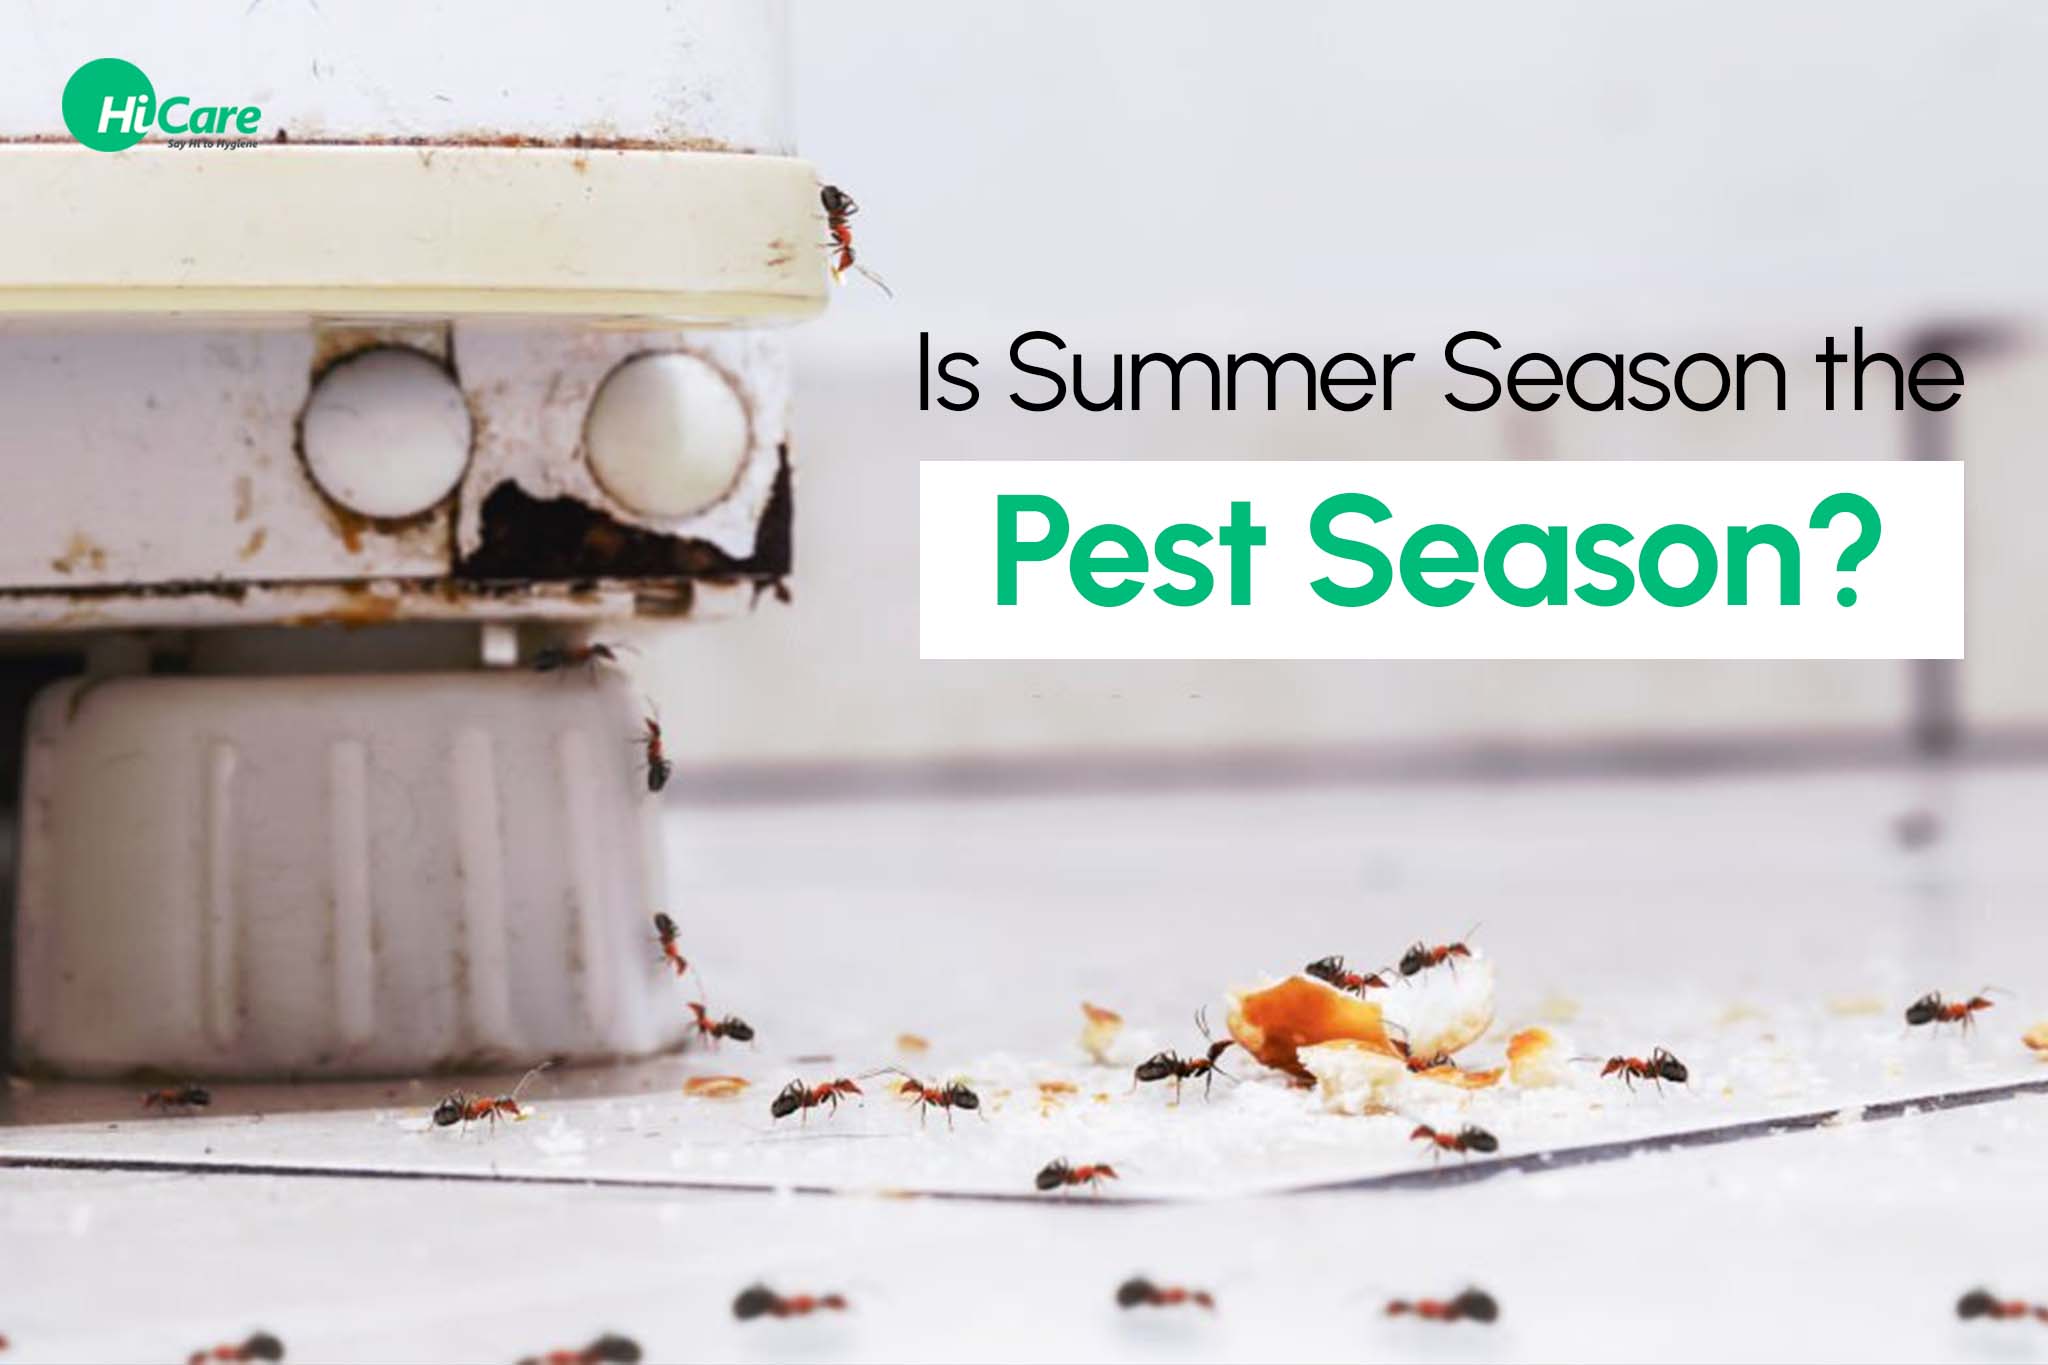 Is Summer the Pest Season?